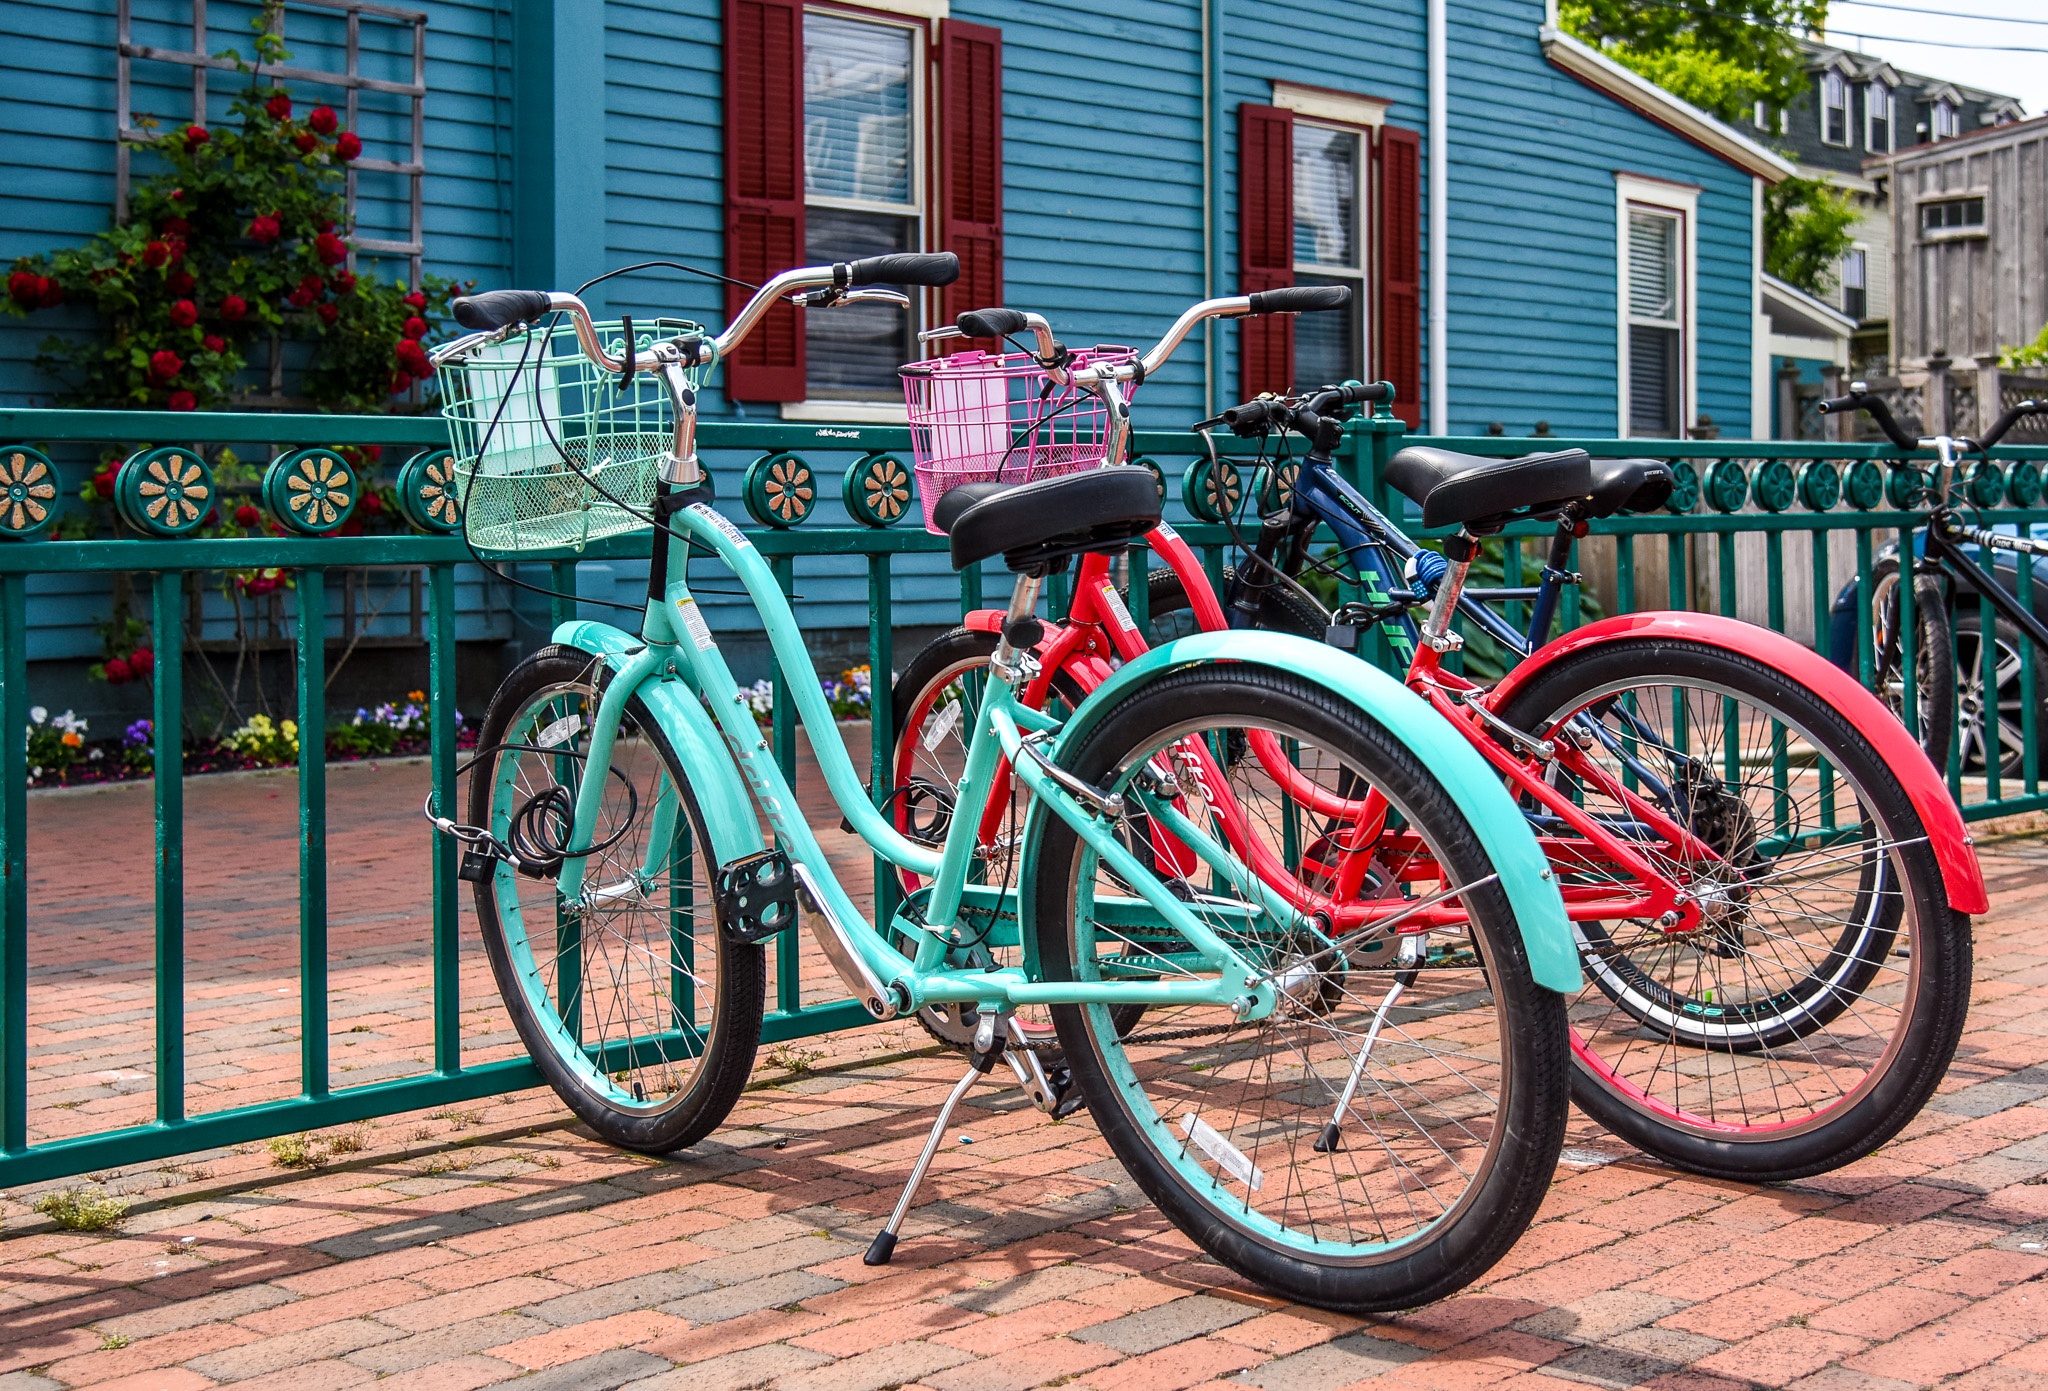 Best Parking Spot fro bikes on Carpenters Lane